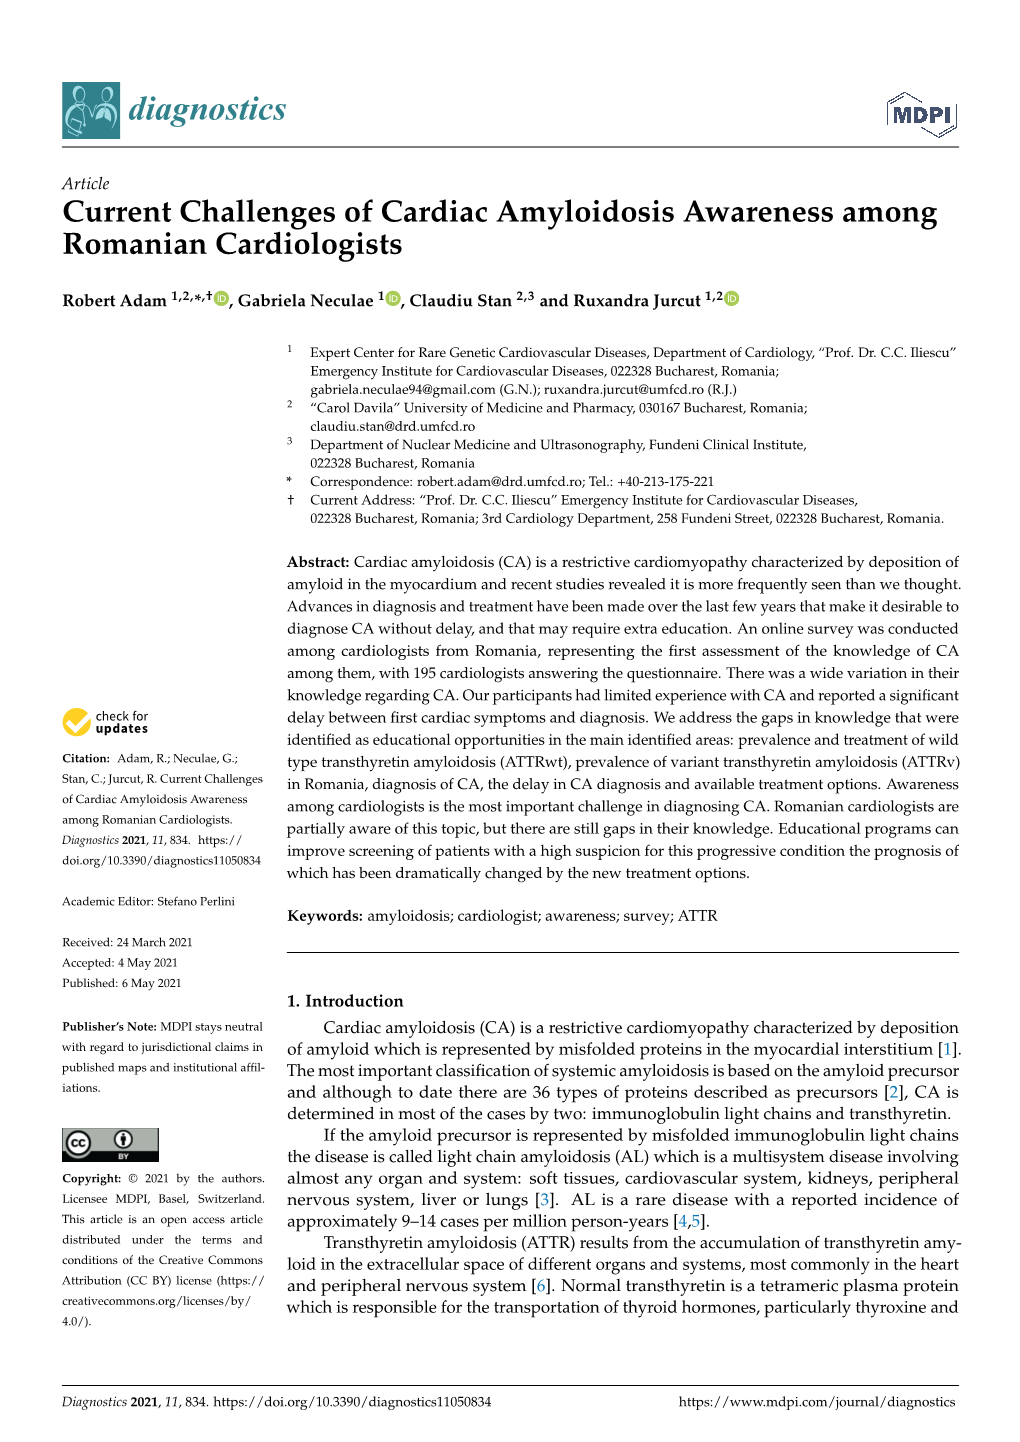 Current Challenges of Cardiac Amyloidosis Awareness Among Romanian Cardiologists